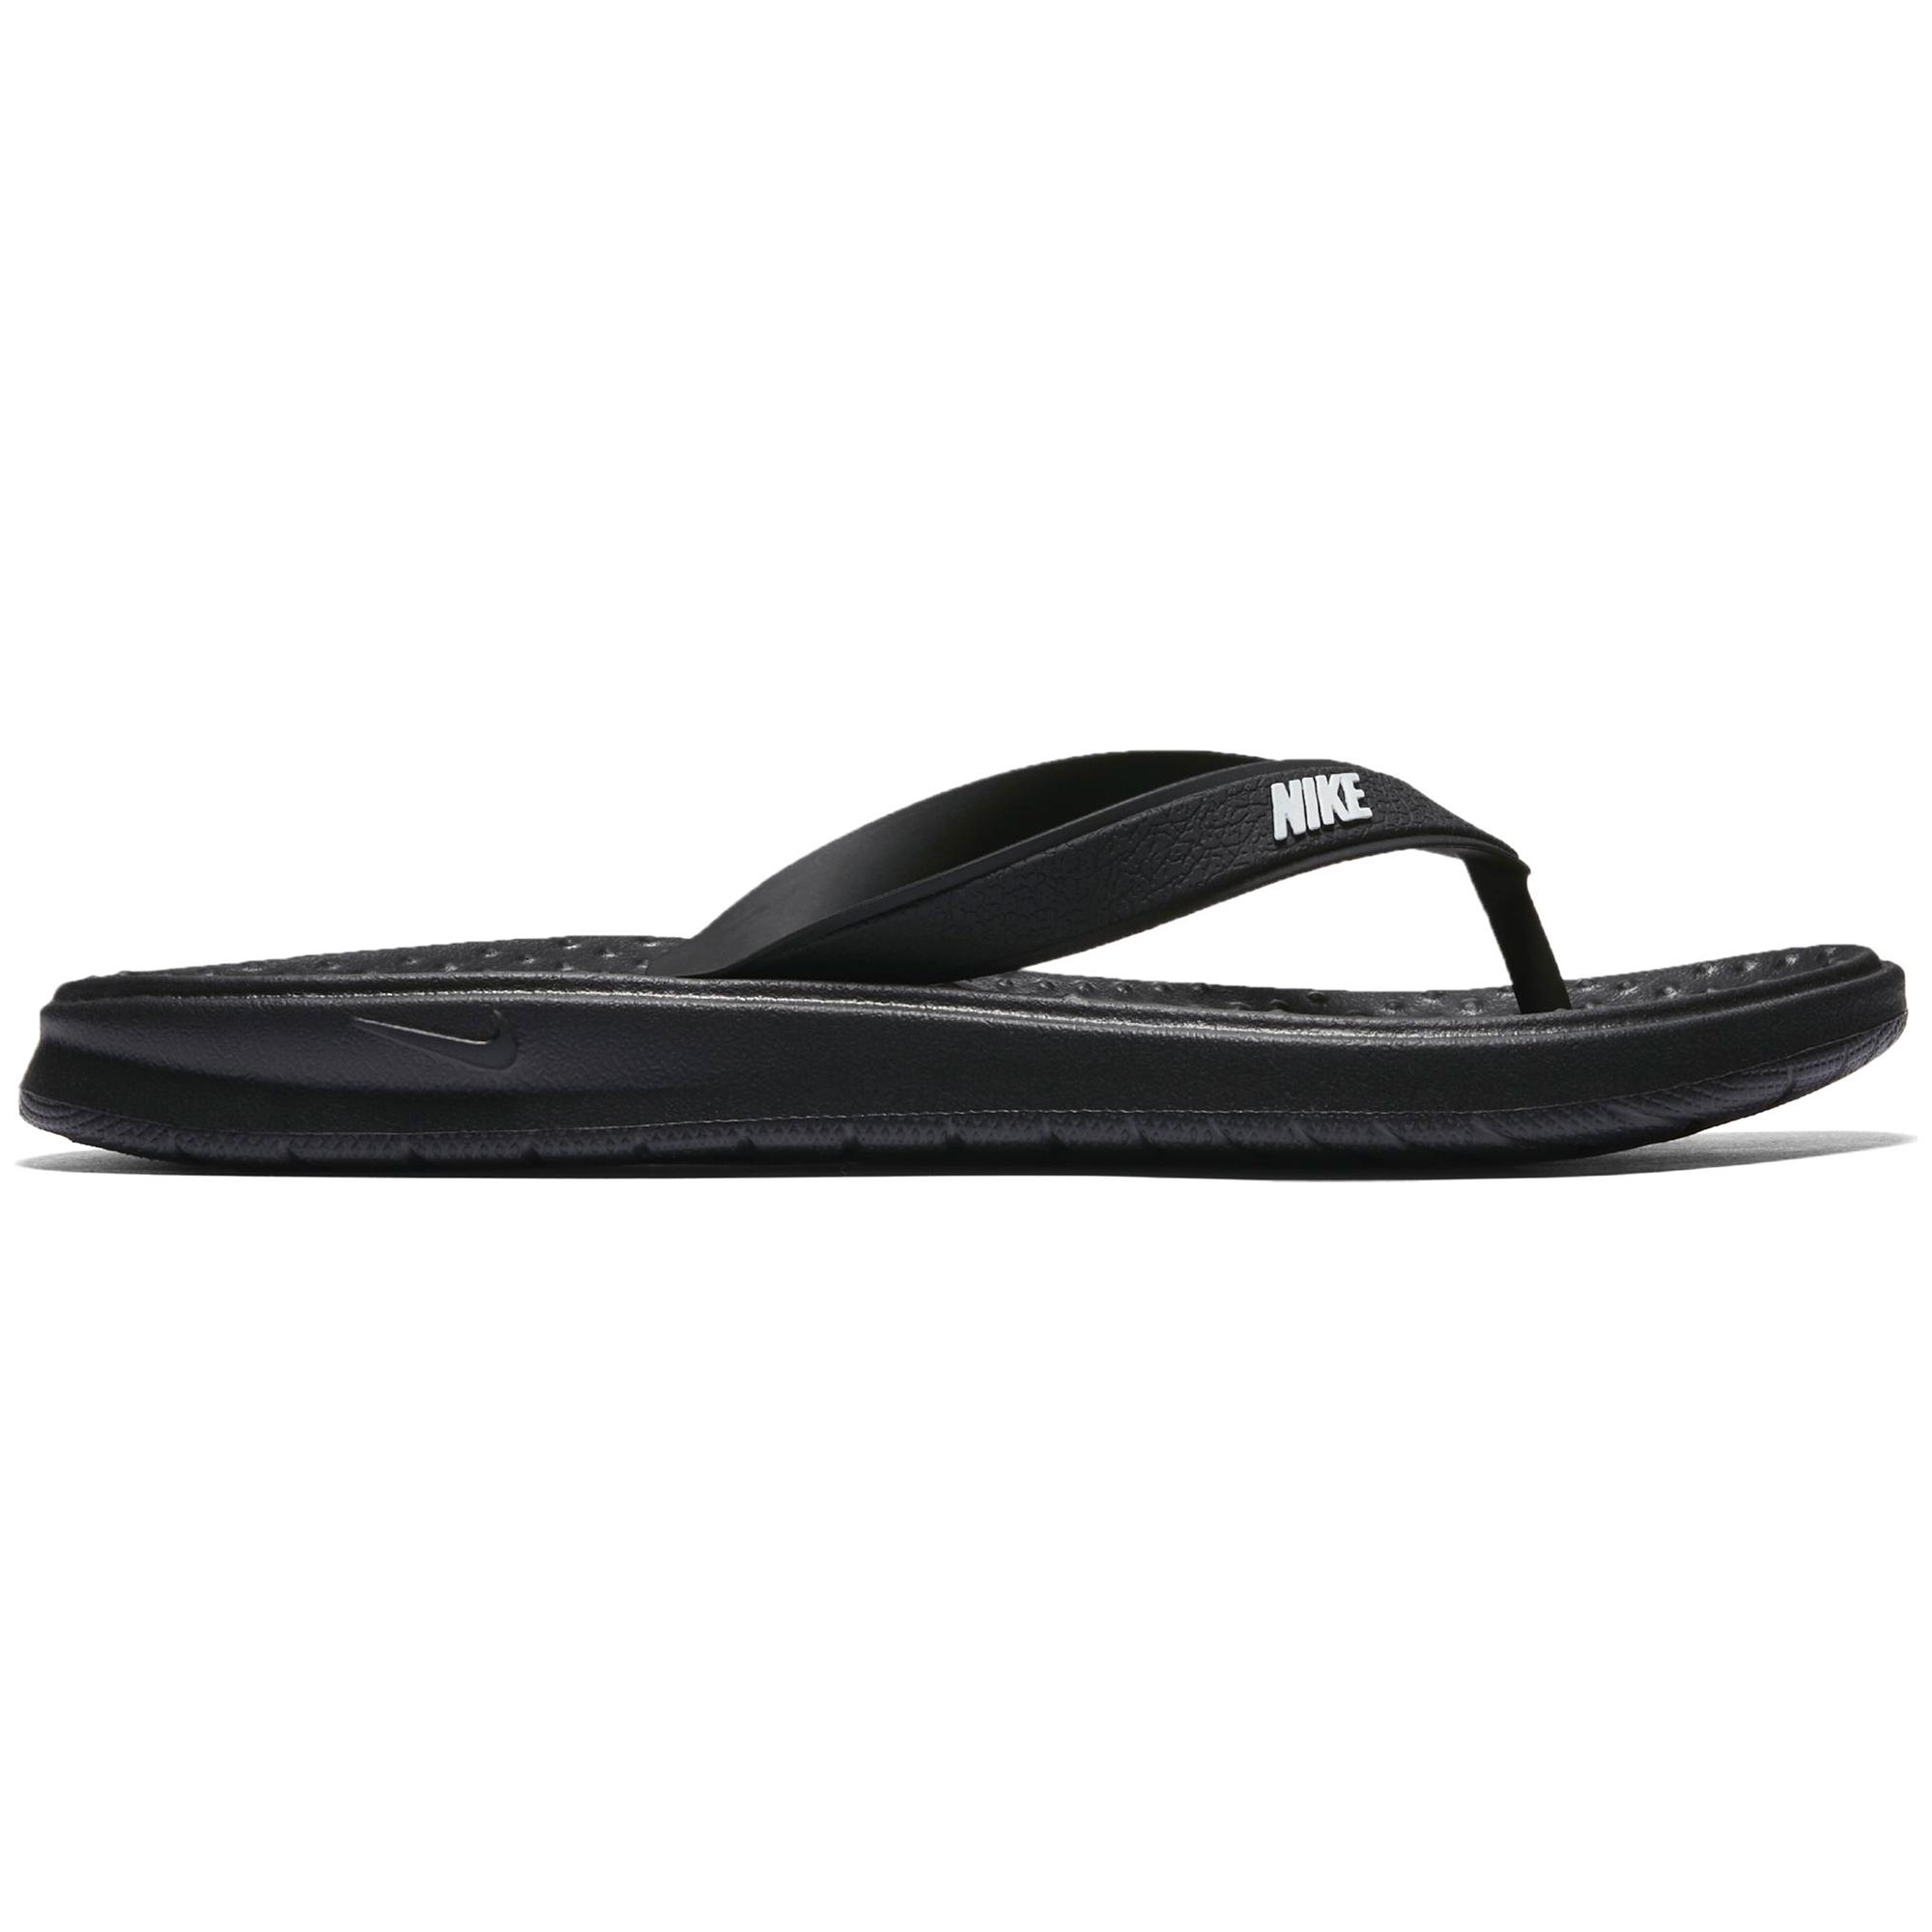 Nike Solay Thong (Flip Flops) - Black/White - Tennisnuts.com